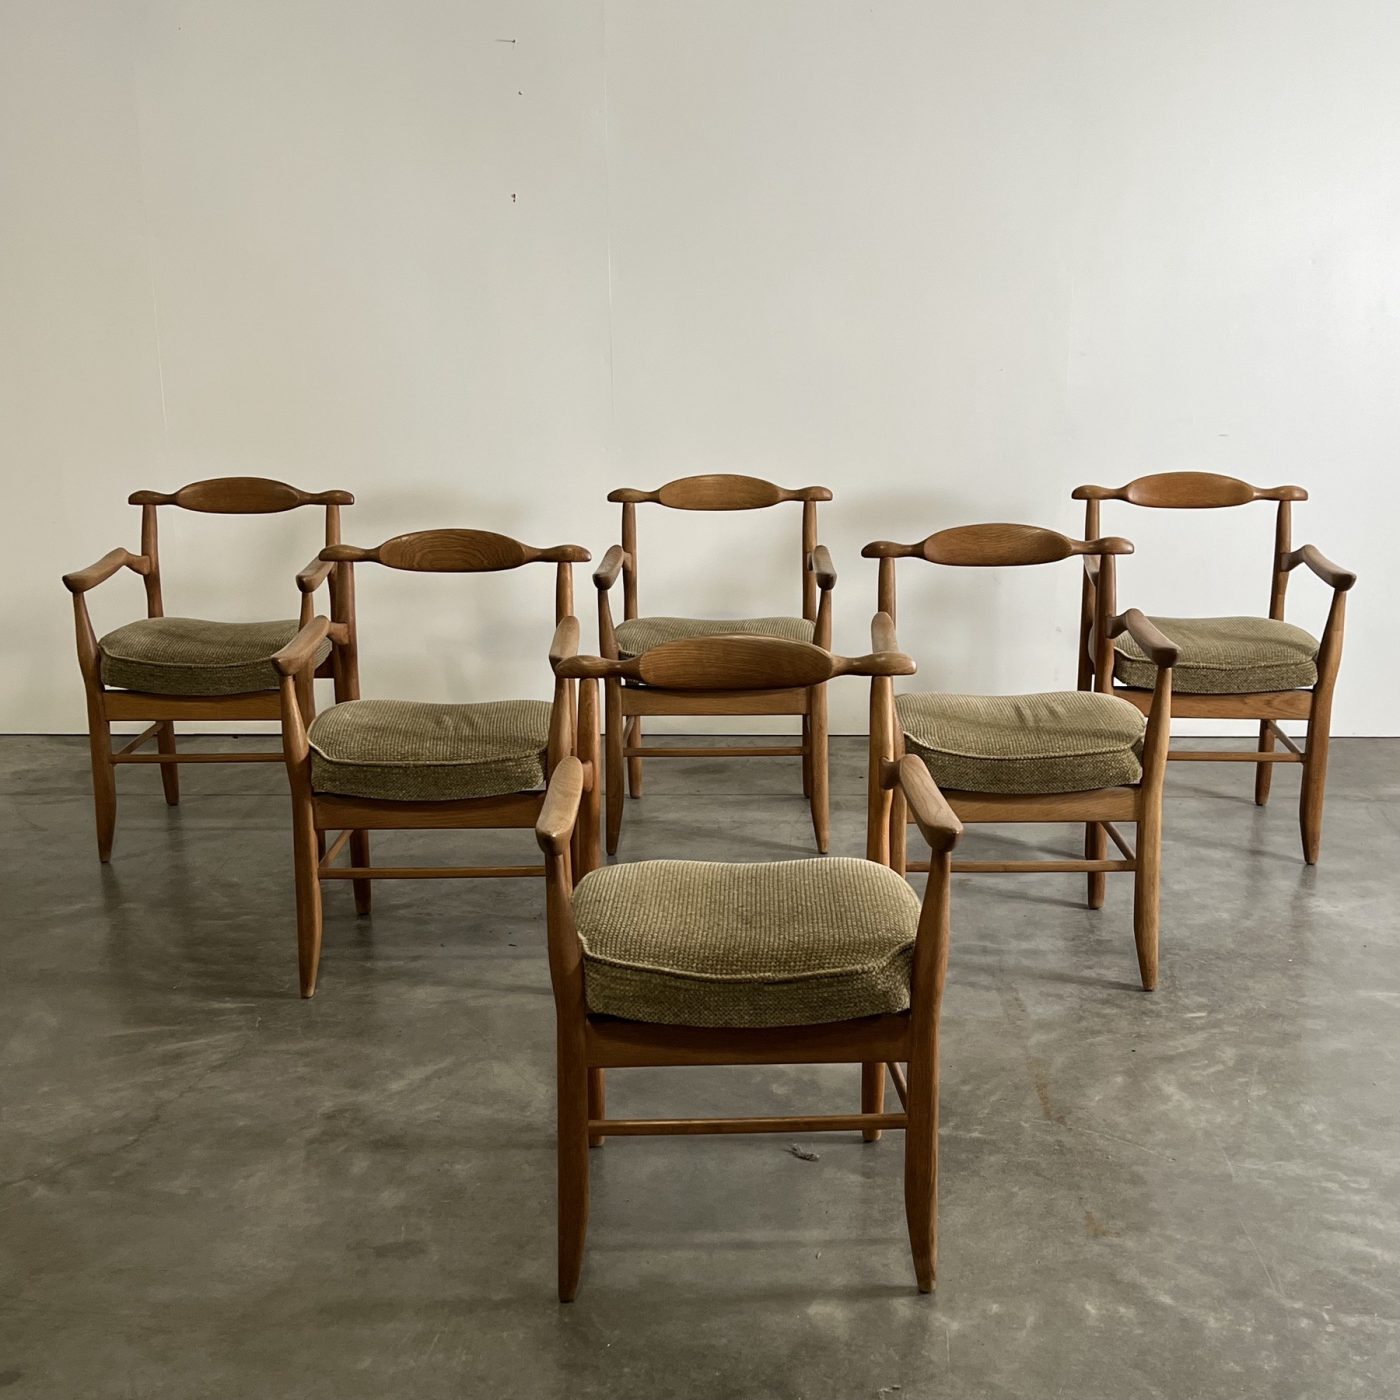 objet-vagabond-guiilerme-armchairs0004